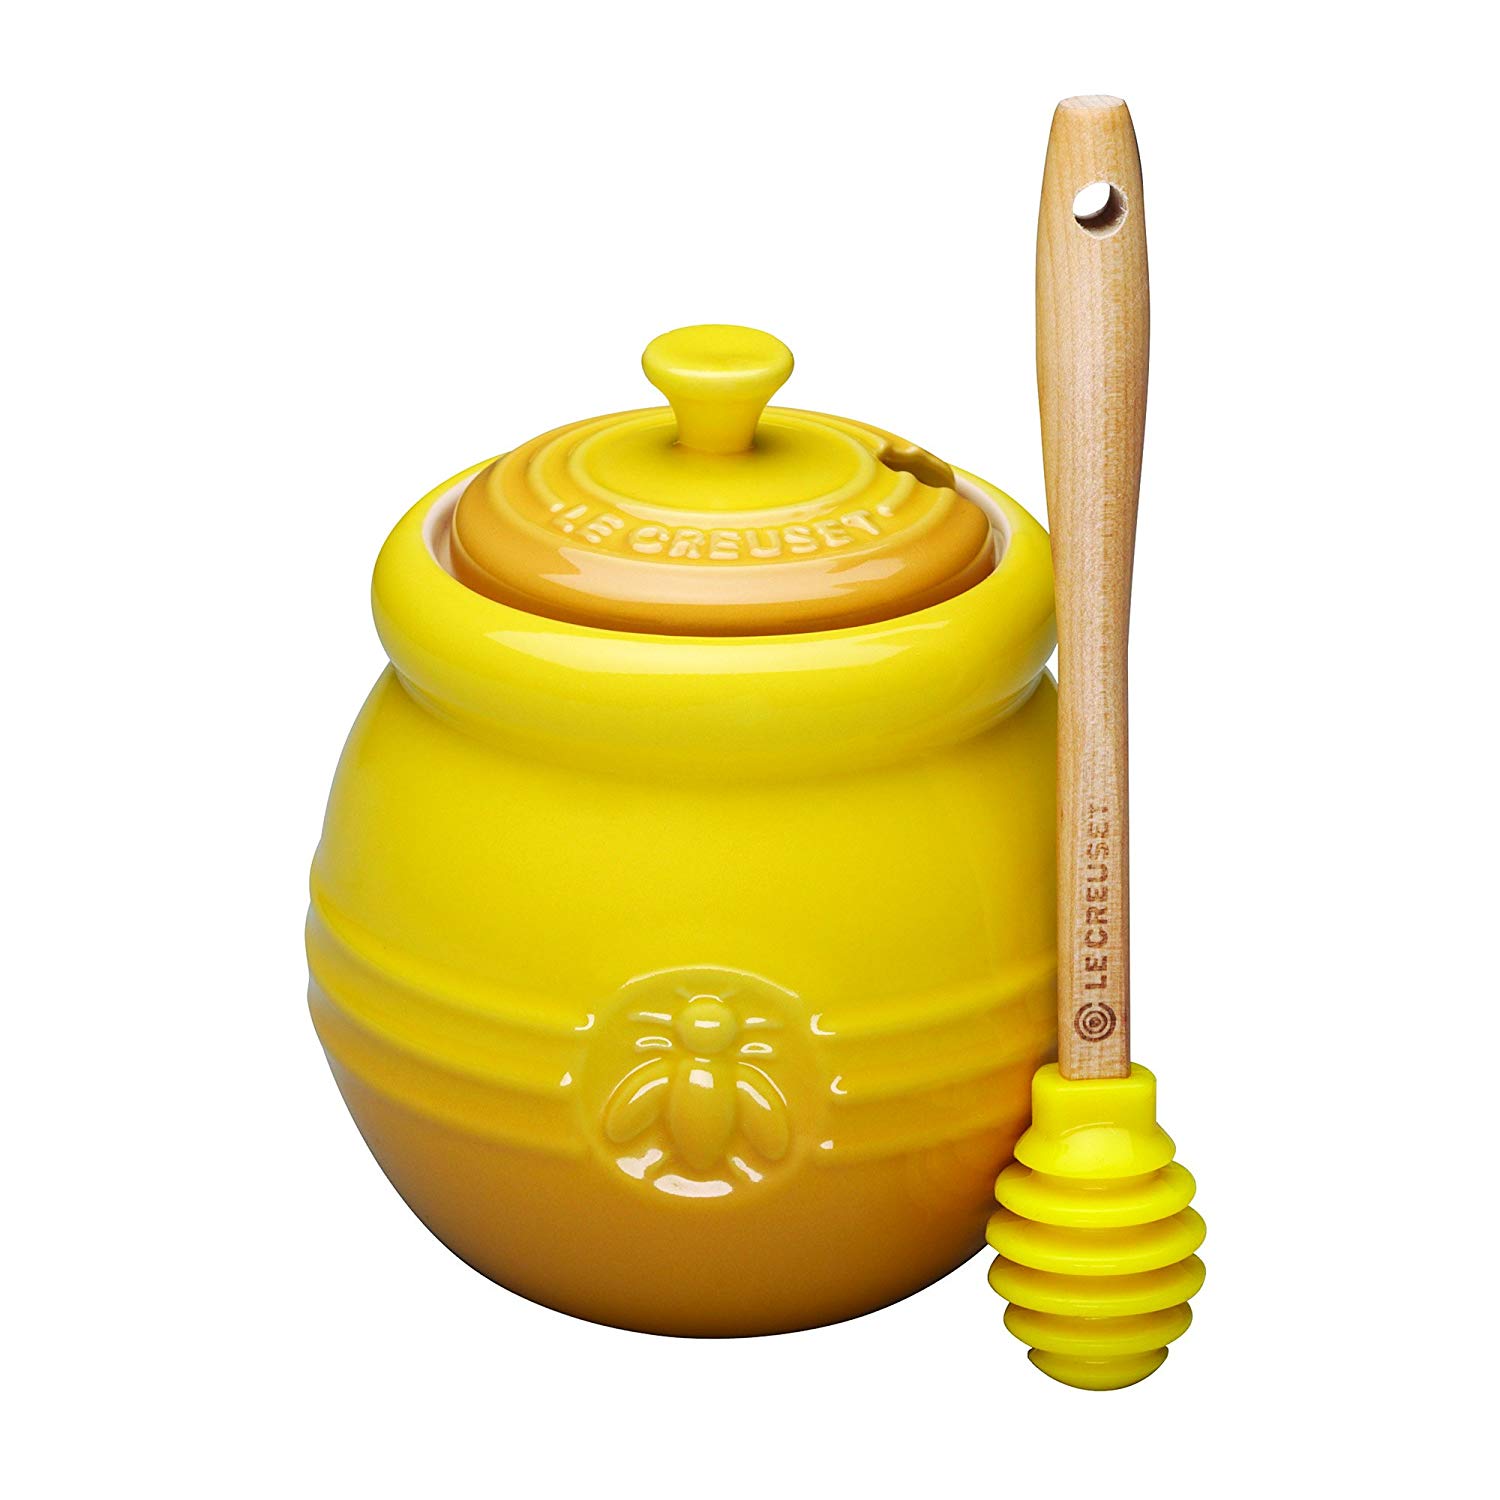 Le Creuset Honey Pot with Dipper